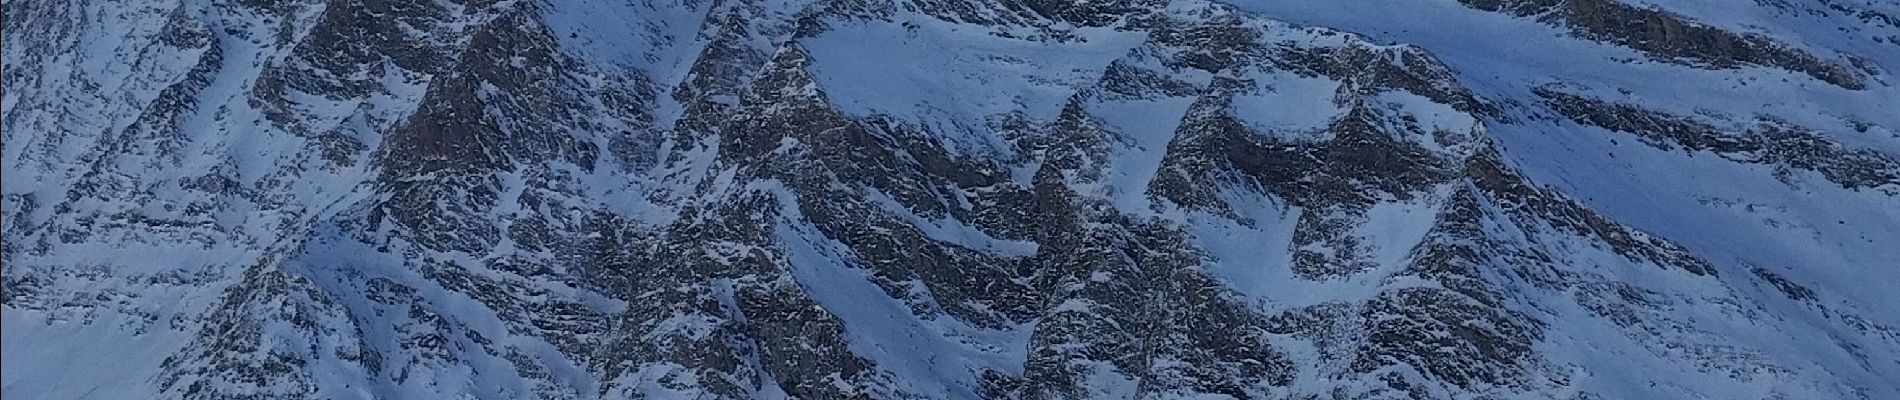 Trail Touring skiing Bessans - Ouille Allegra  - Photo